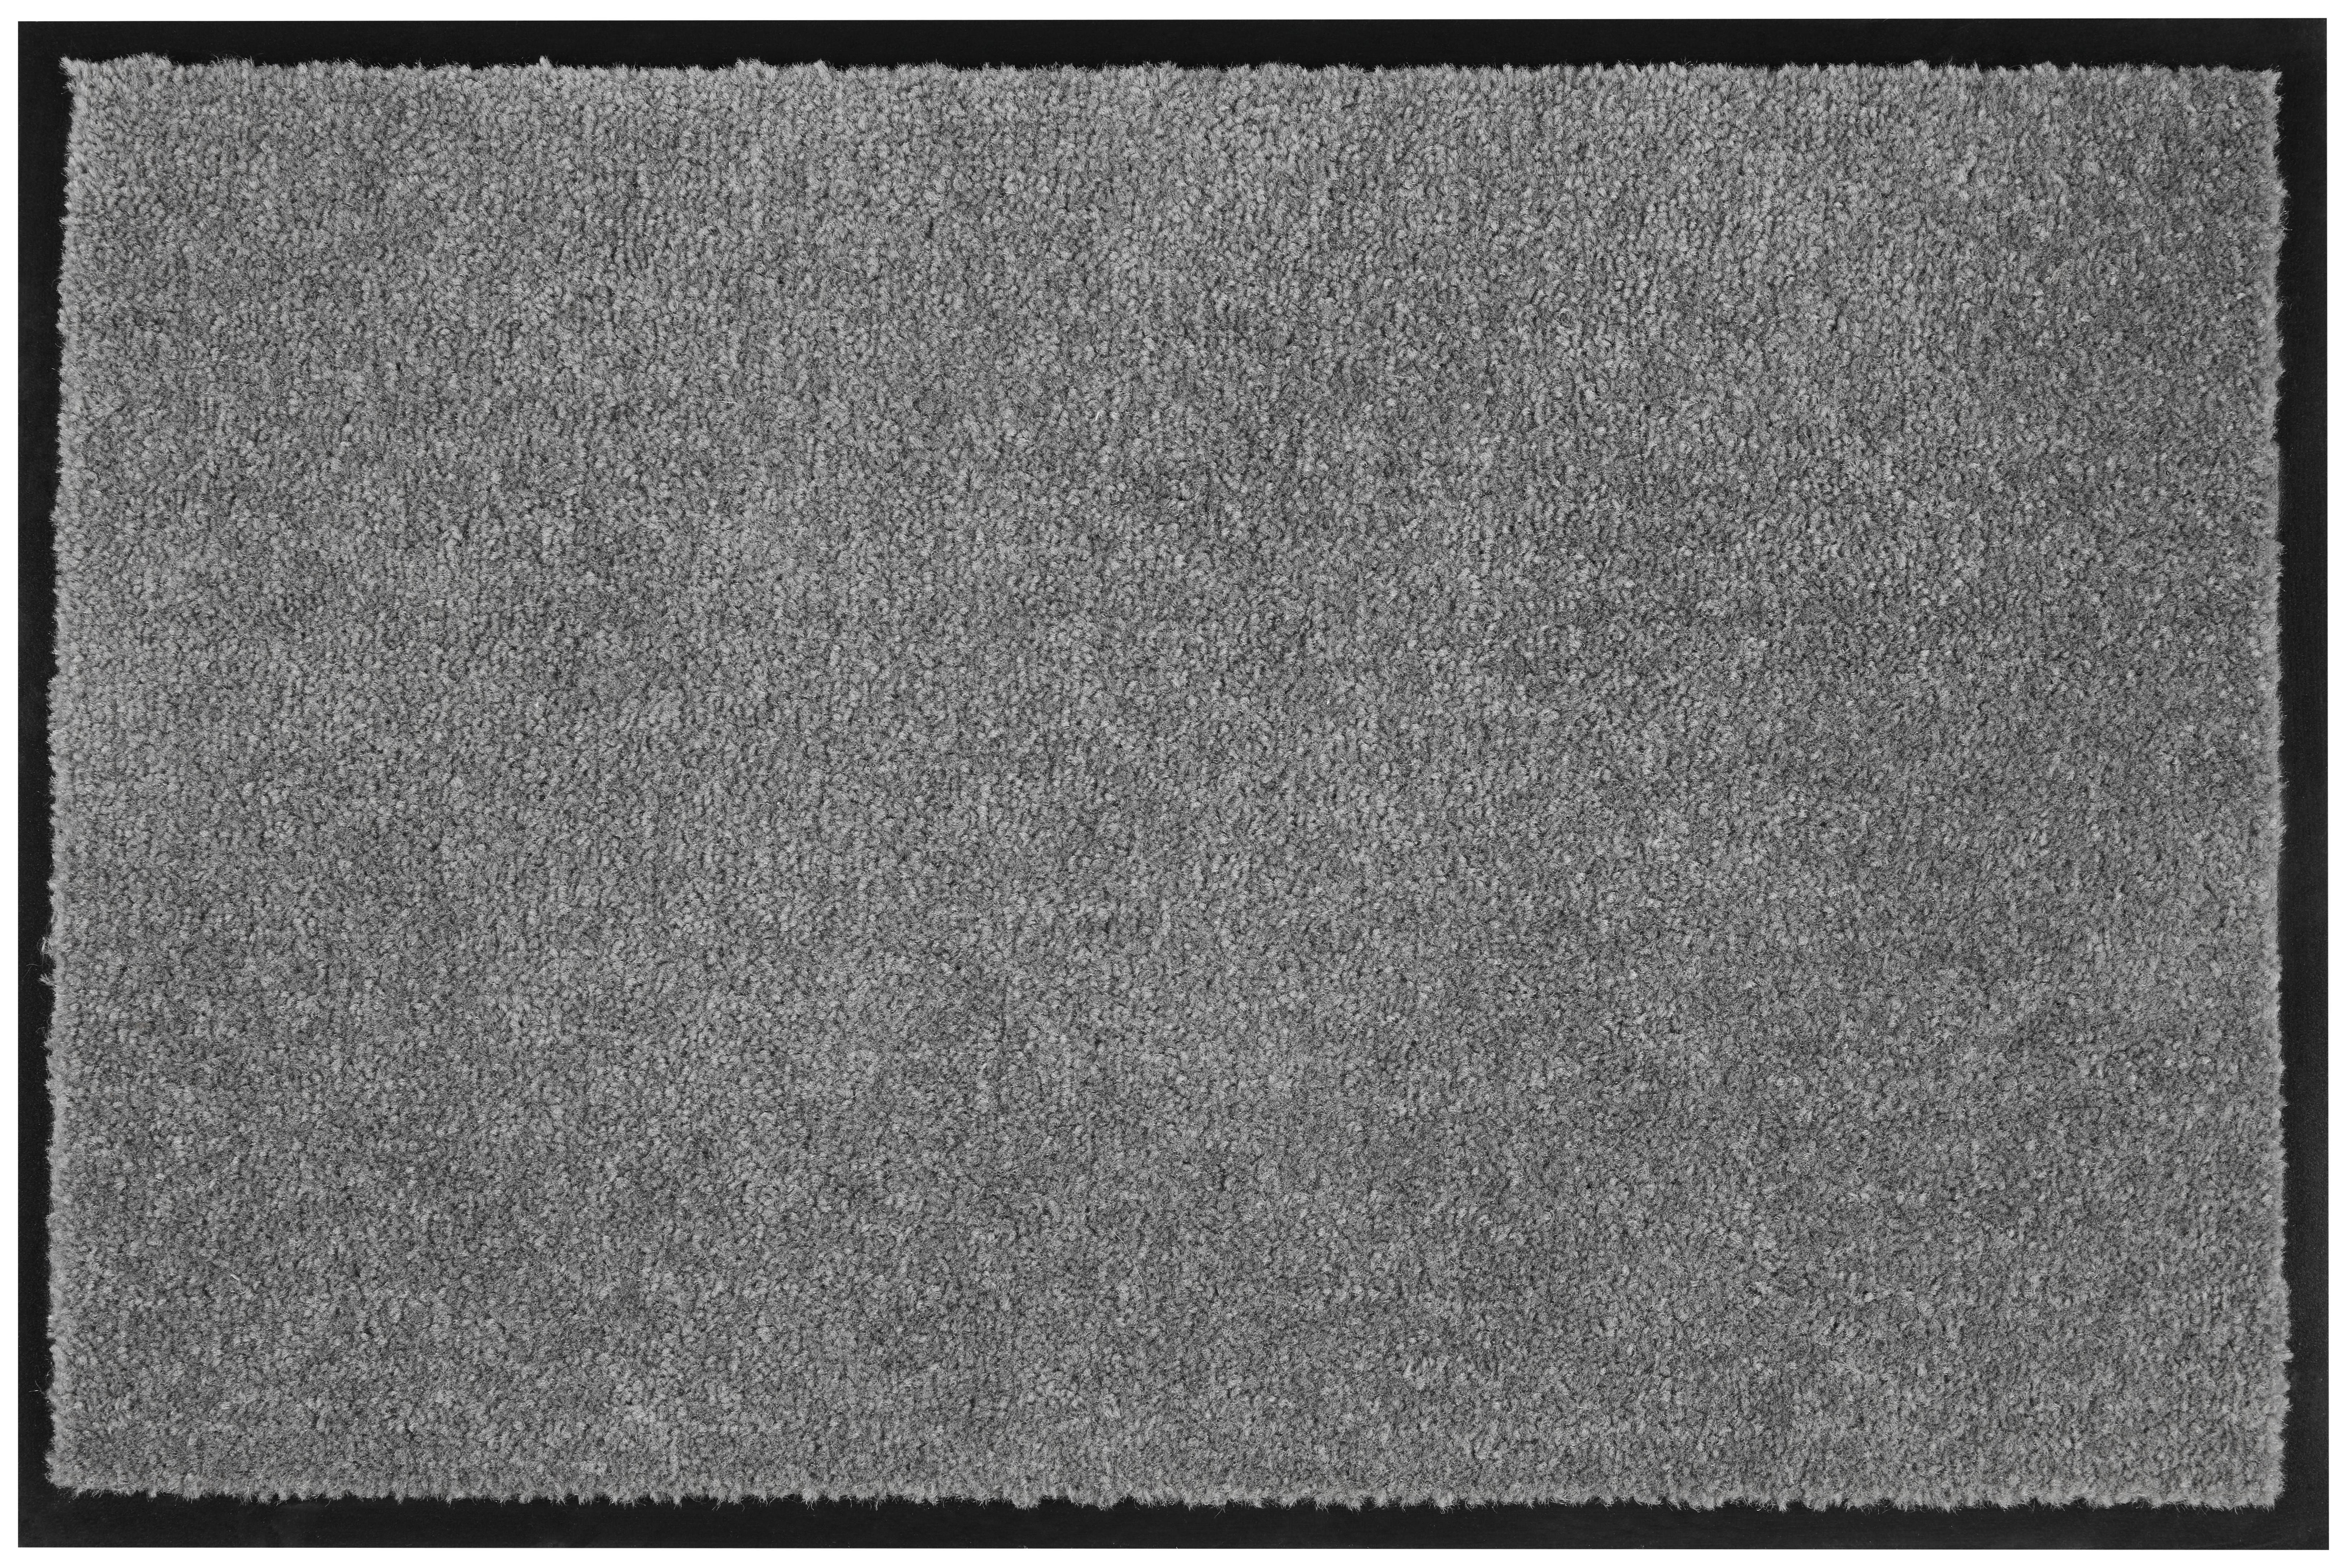 Otirač Eton 1 - antracit, Modern, tekstil (40/60cm) - Modern Living